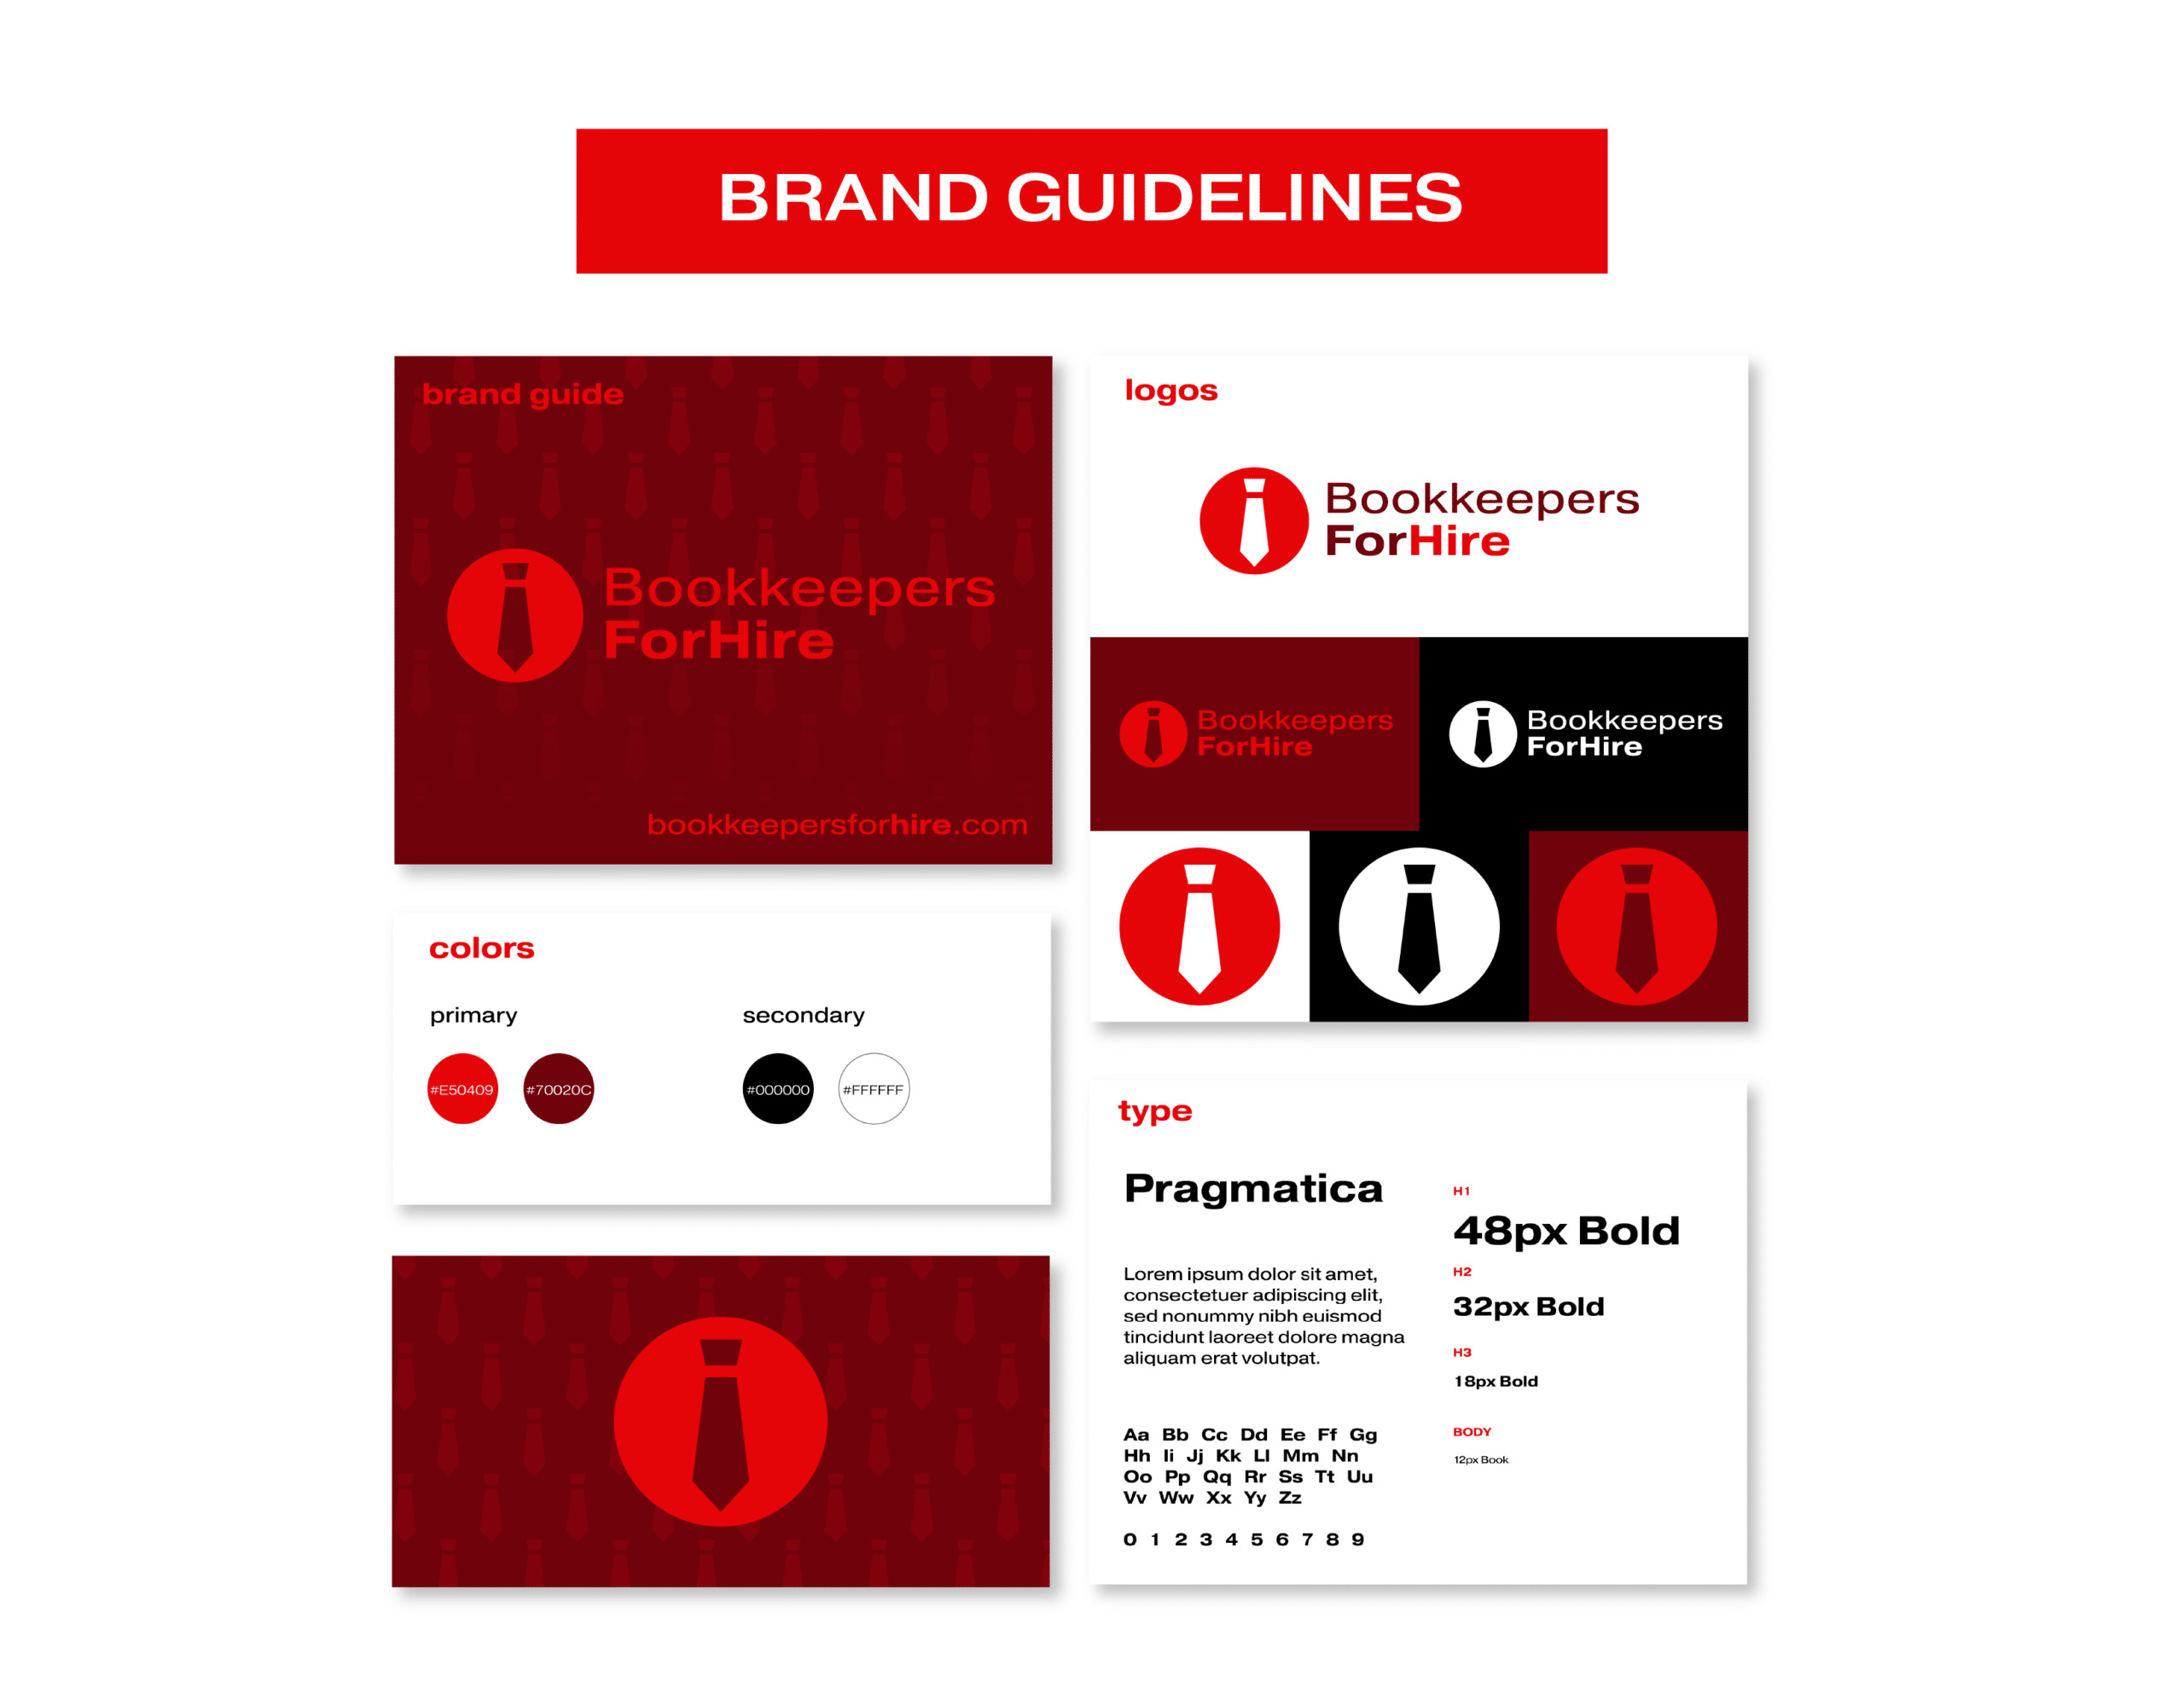 03BKForHire_Showcase_Branding Guidelines